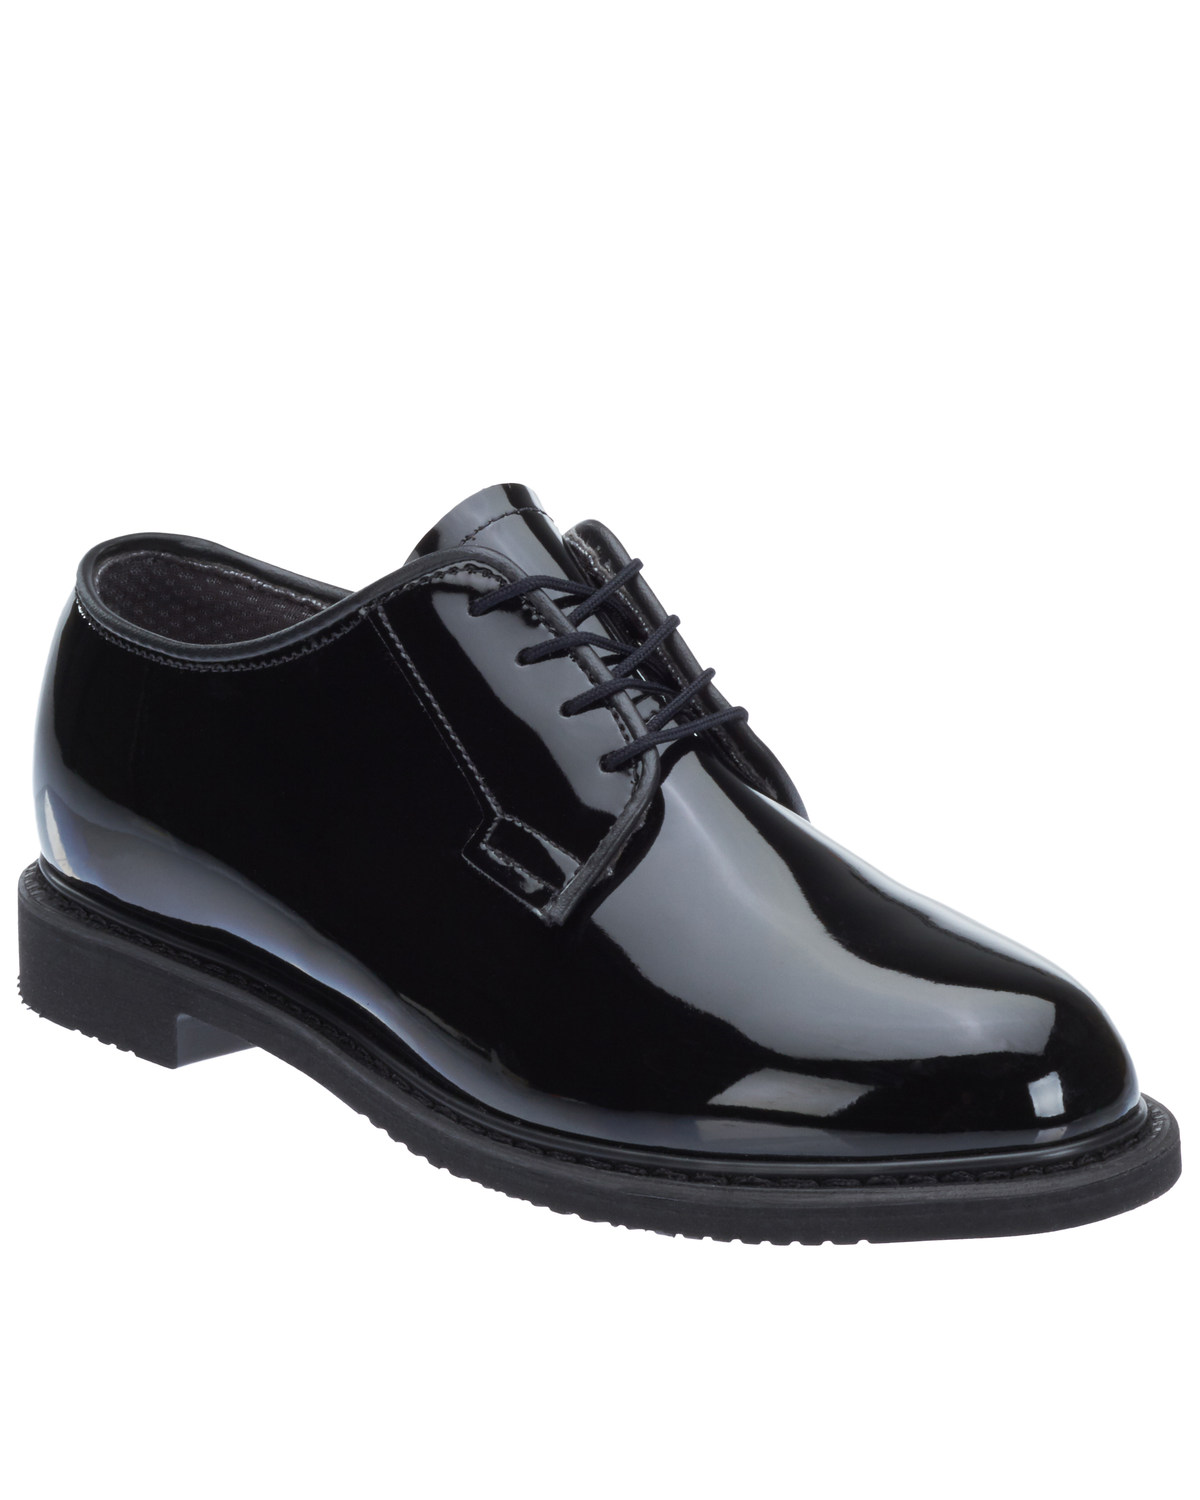 Bates Women's Lites Black High Gloss Oxford Shoes - Round Toe